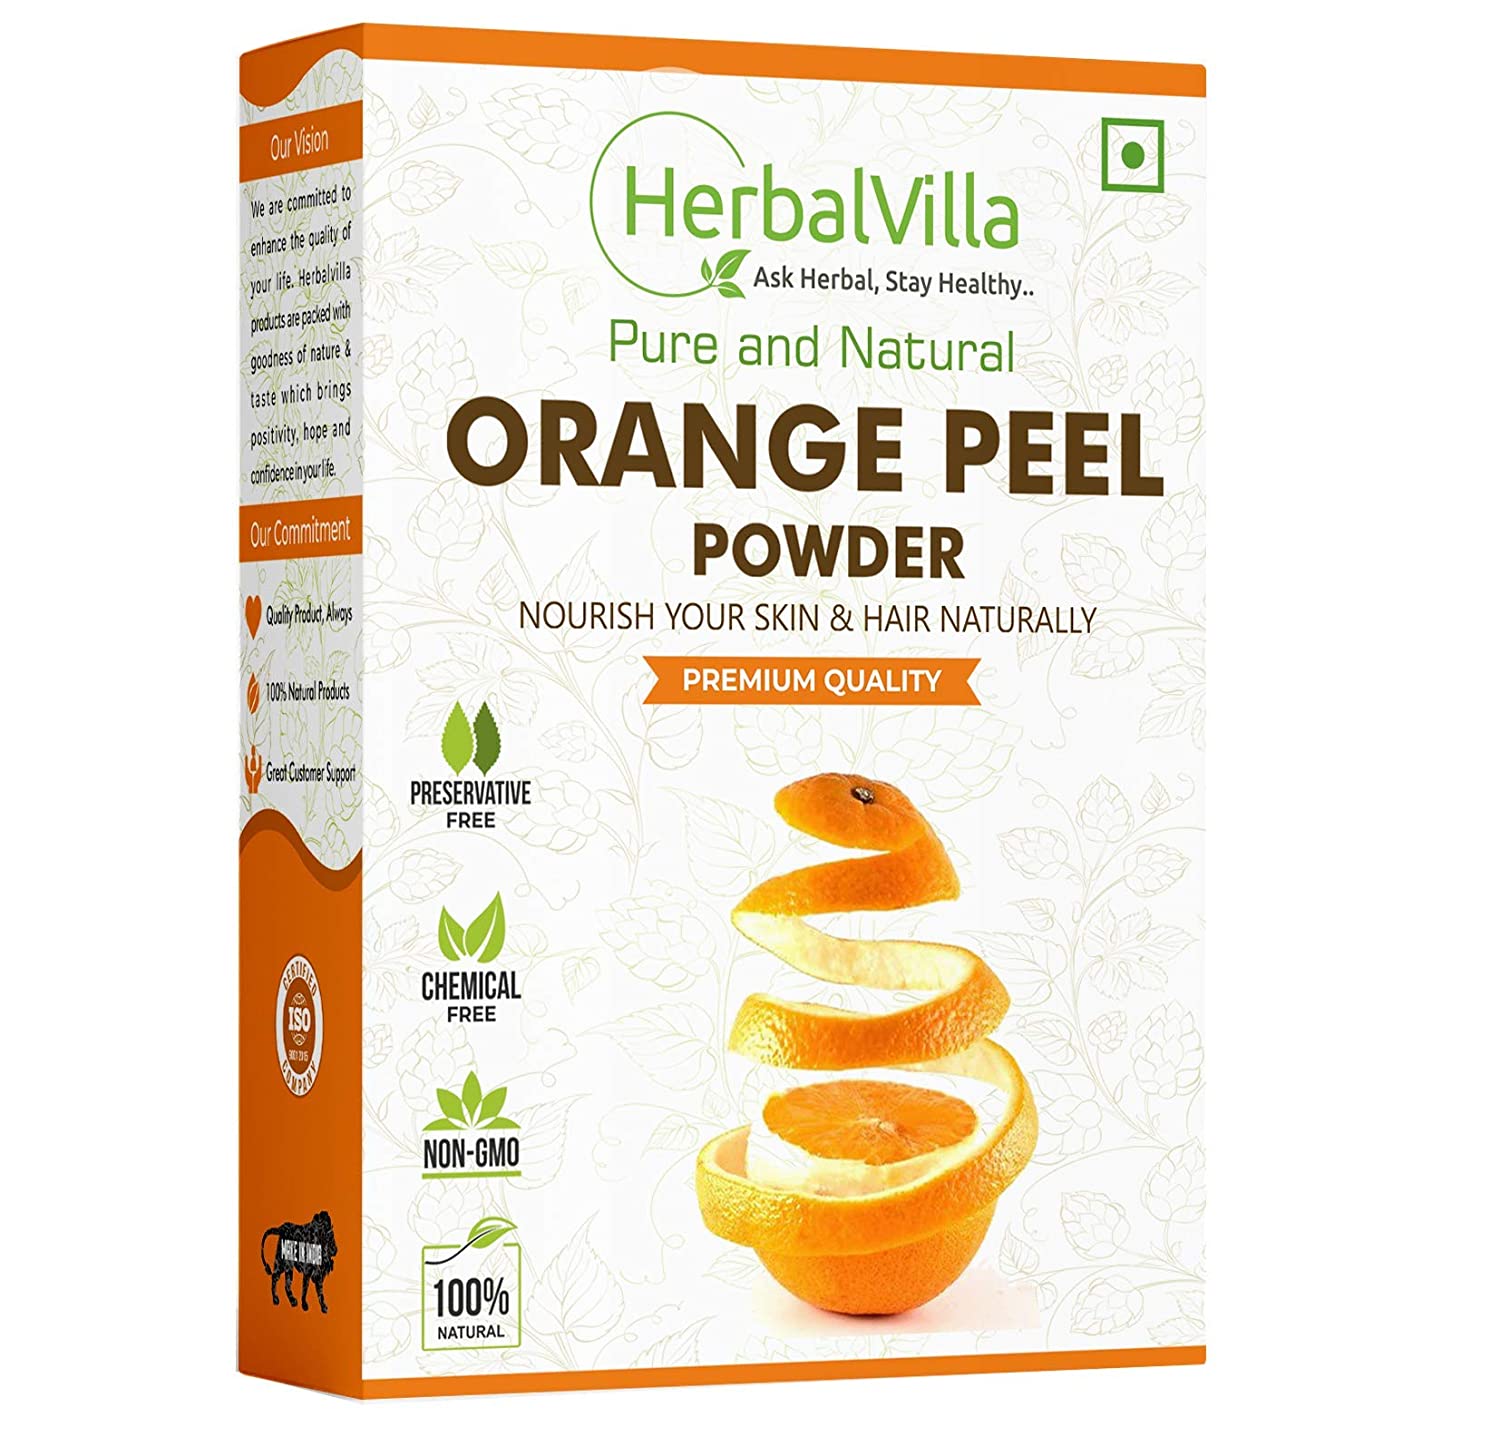 Herbvilla Orange Peel Powder - Herbvilla